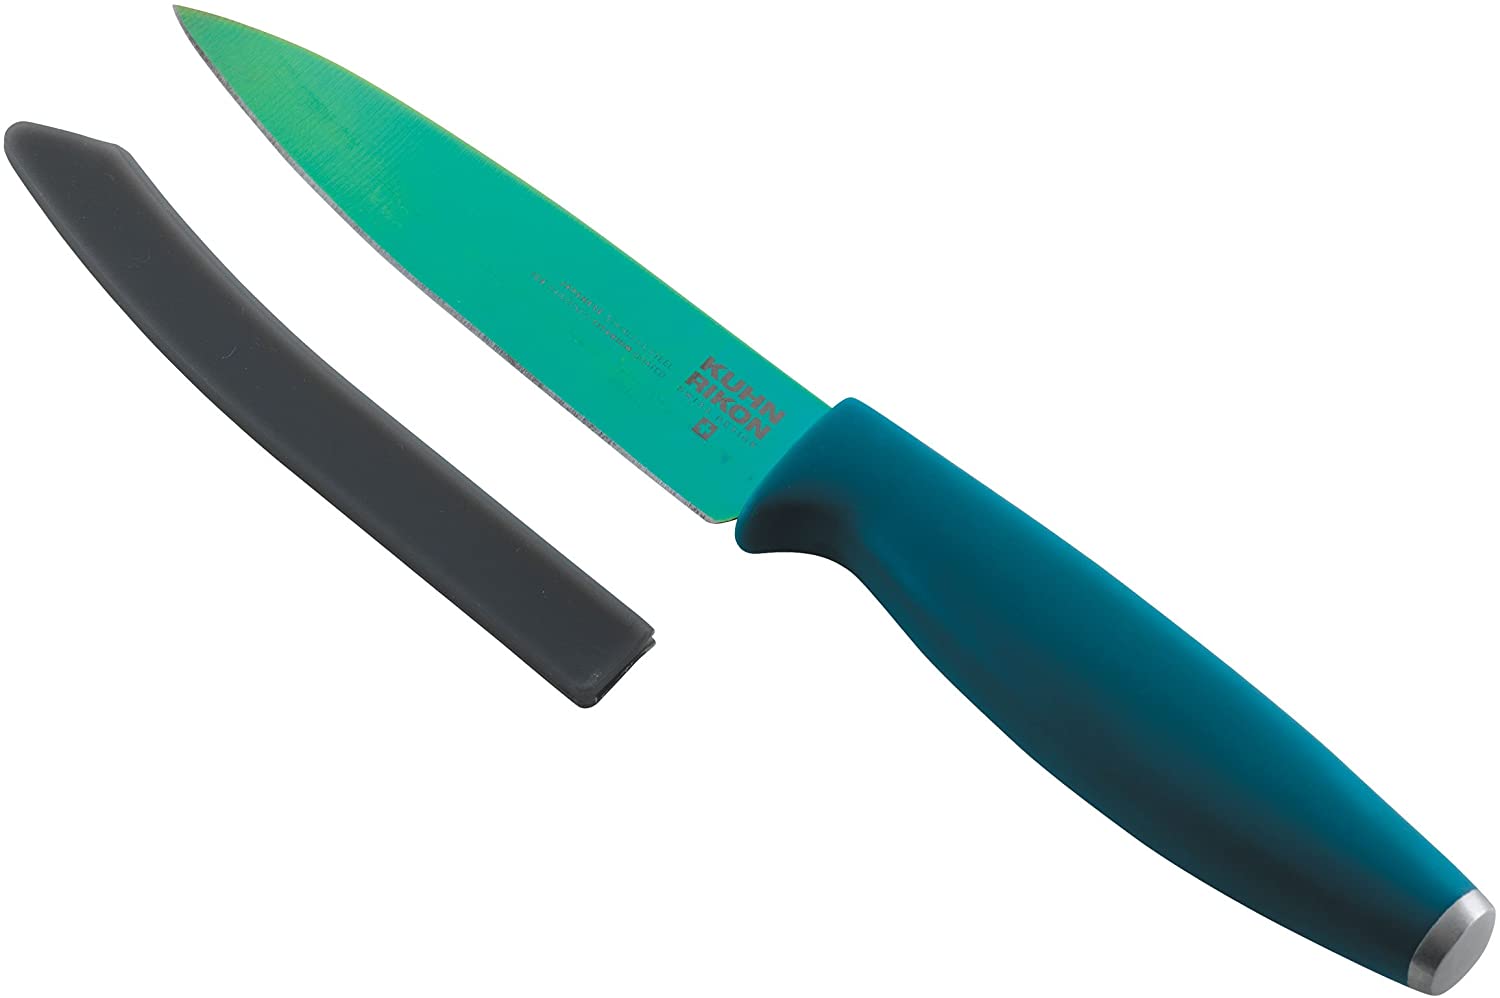 \'Kuhn Rikon Colori Titanium 26575 Peeling Knife, Stainless Steel, Green, 8 \"x 2 x 0.5 cm